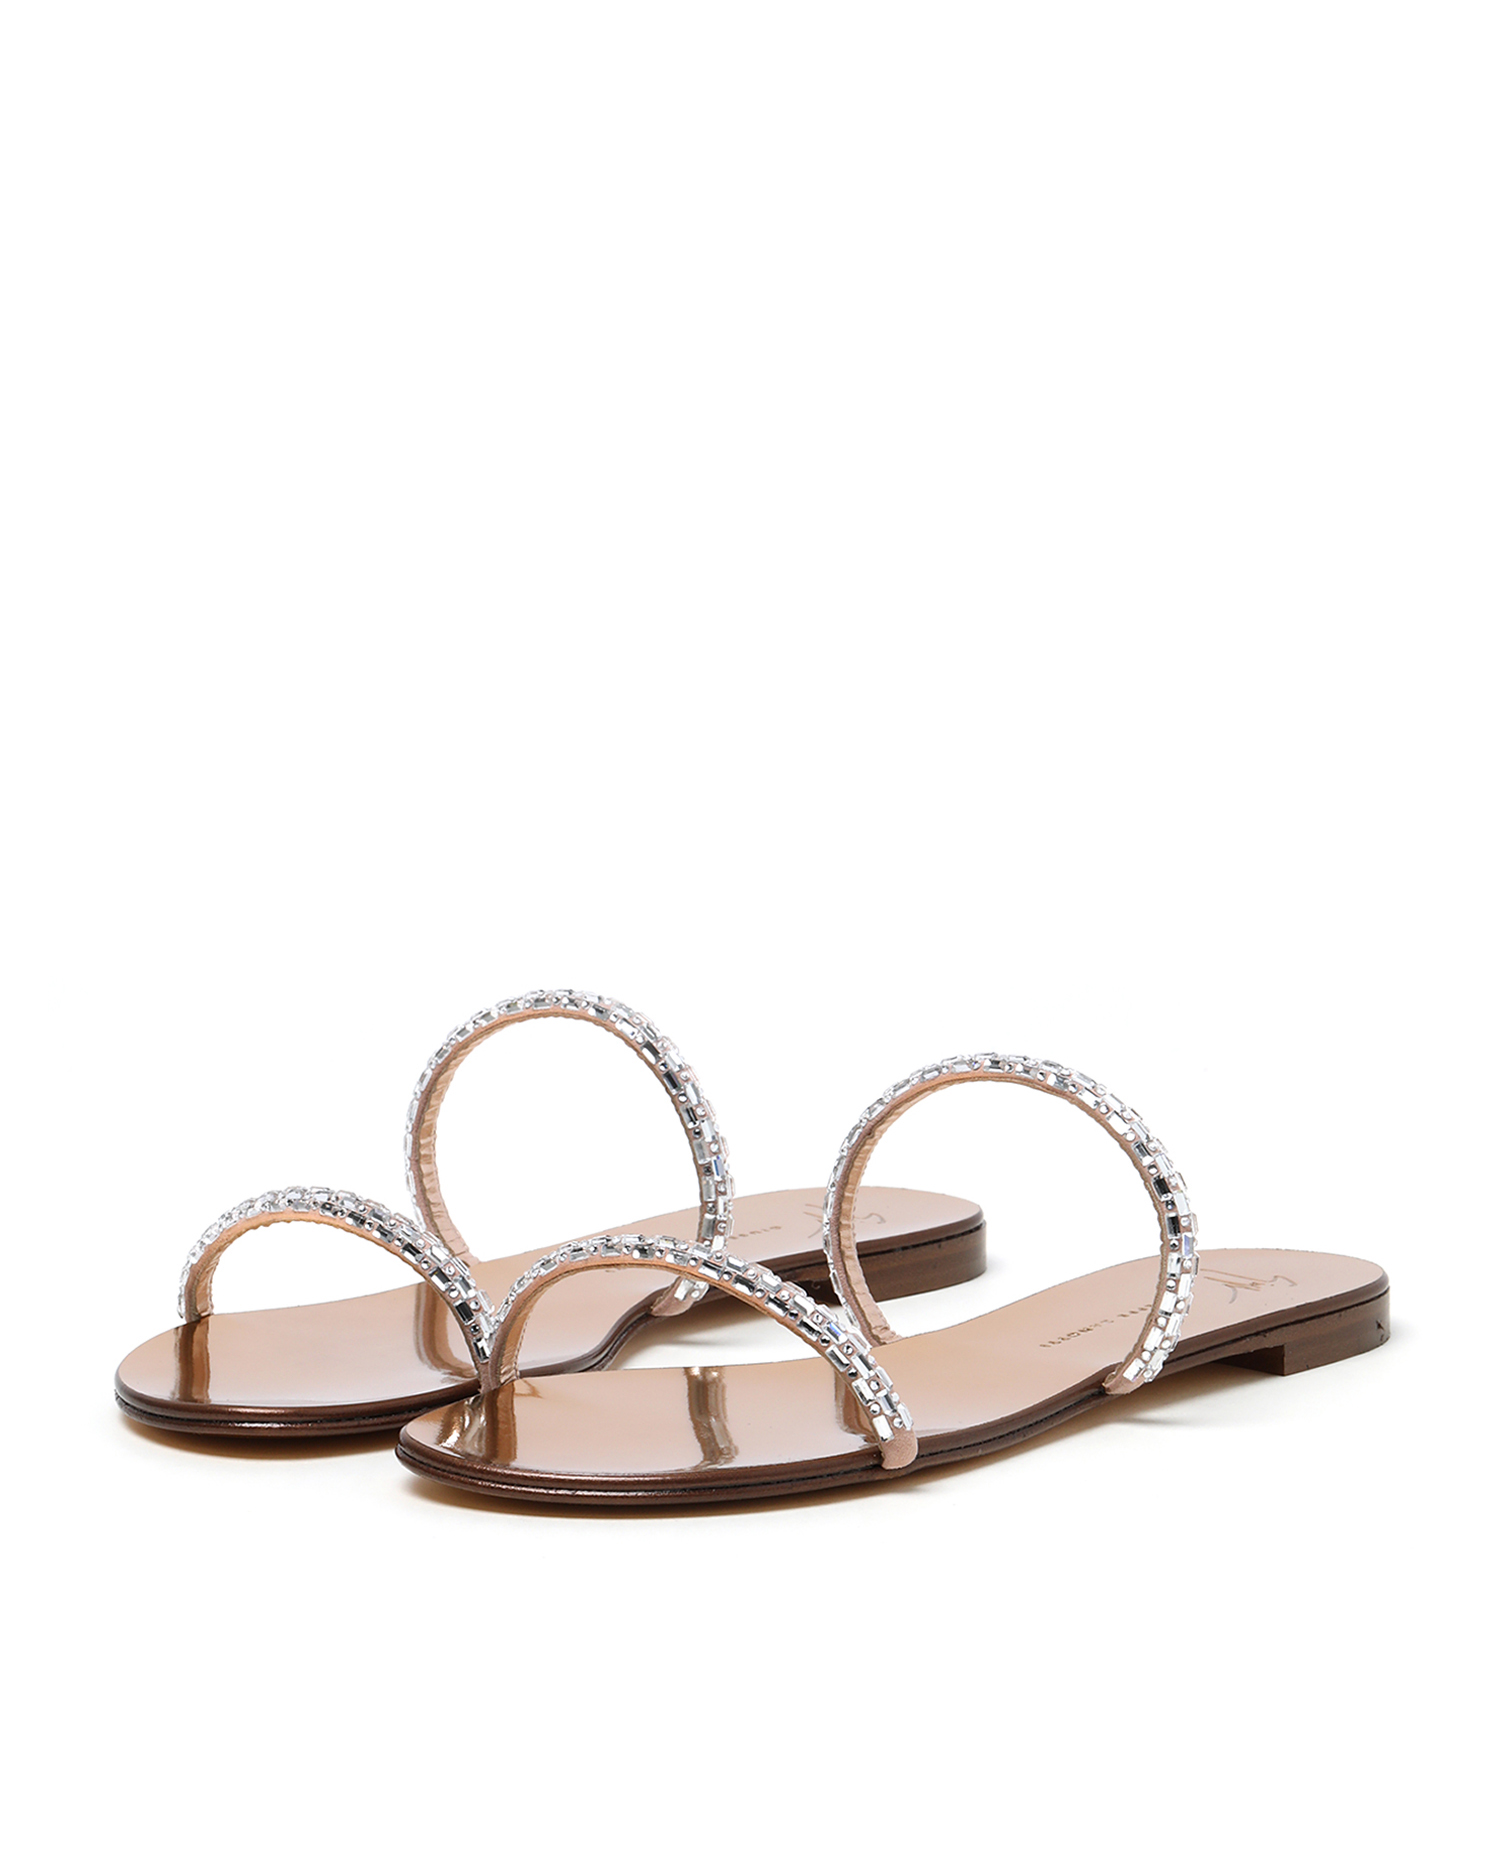 MIU MIU brown leather crystal jewel embellished strap flat sandals EU36.5  US 6.5 | eBay